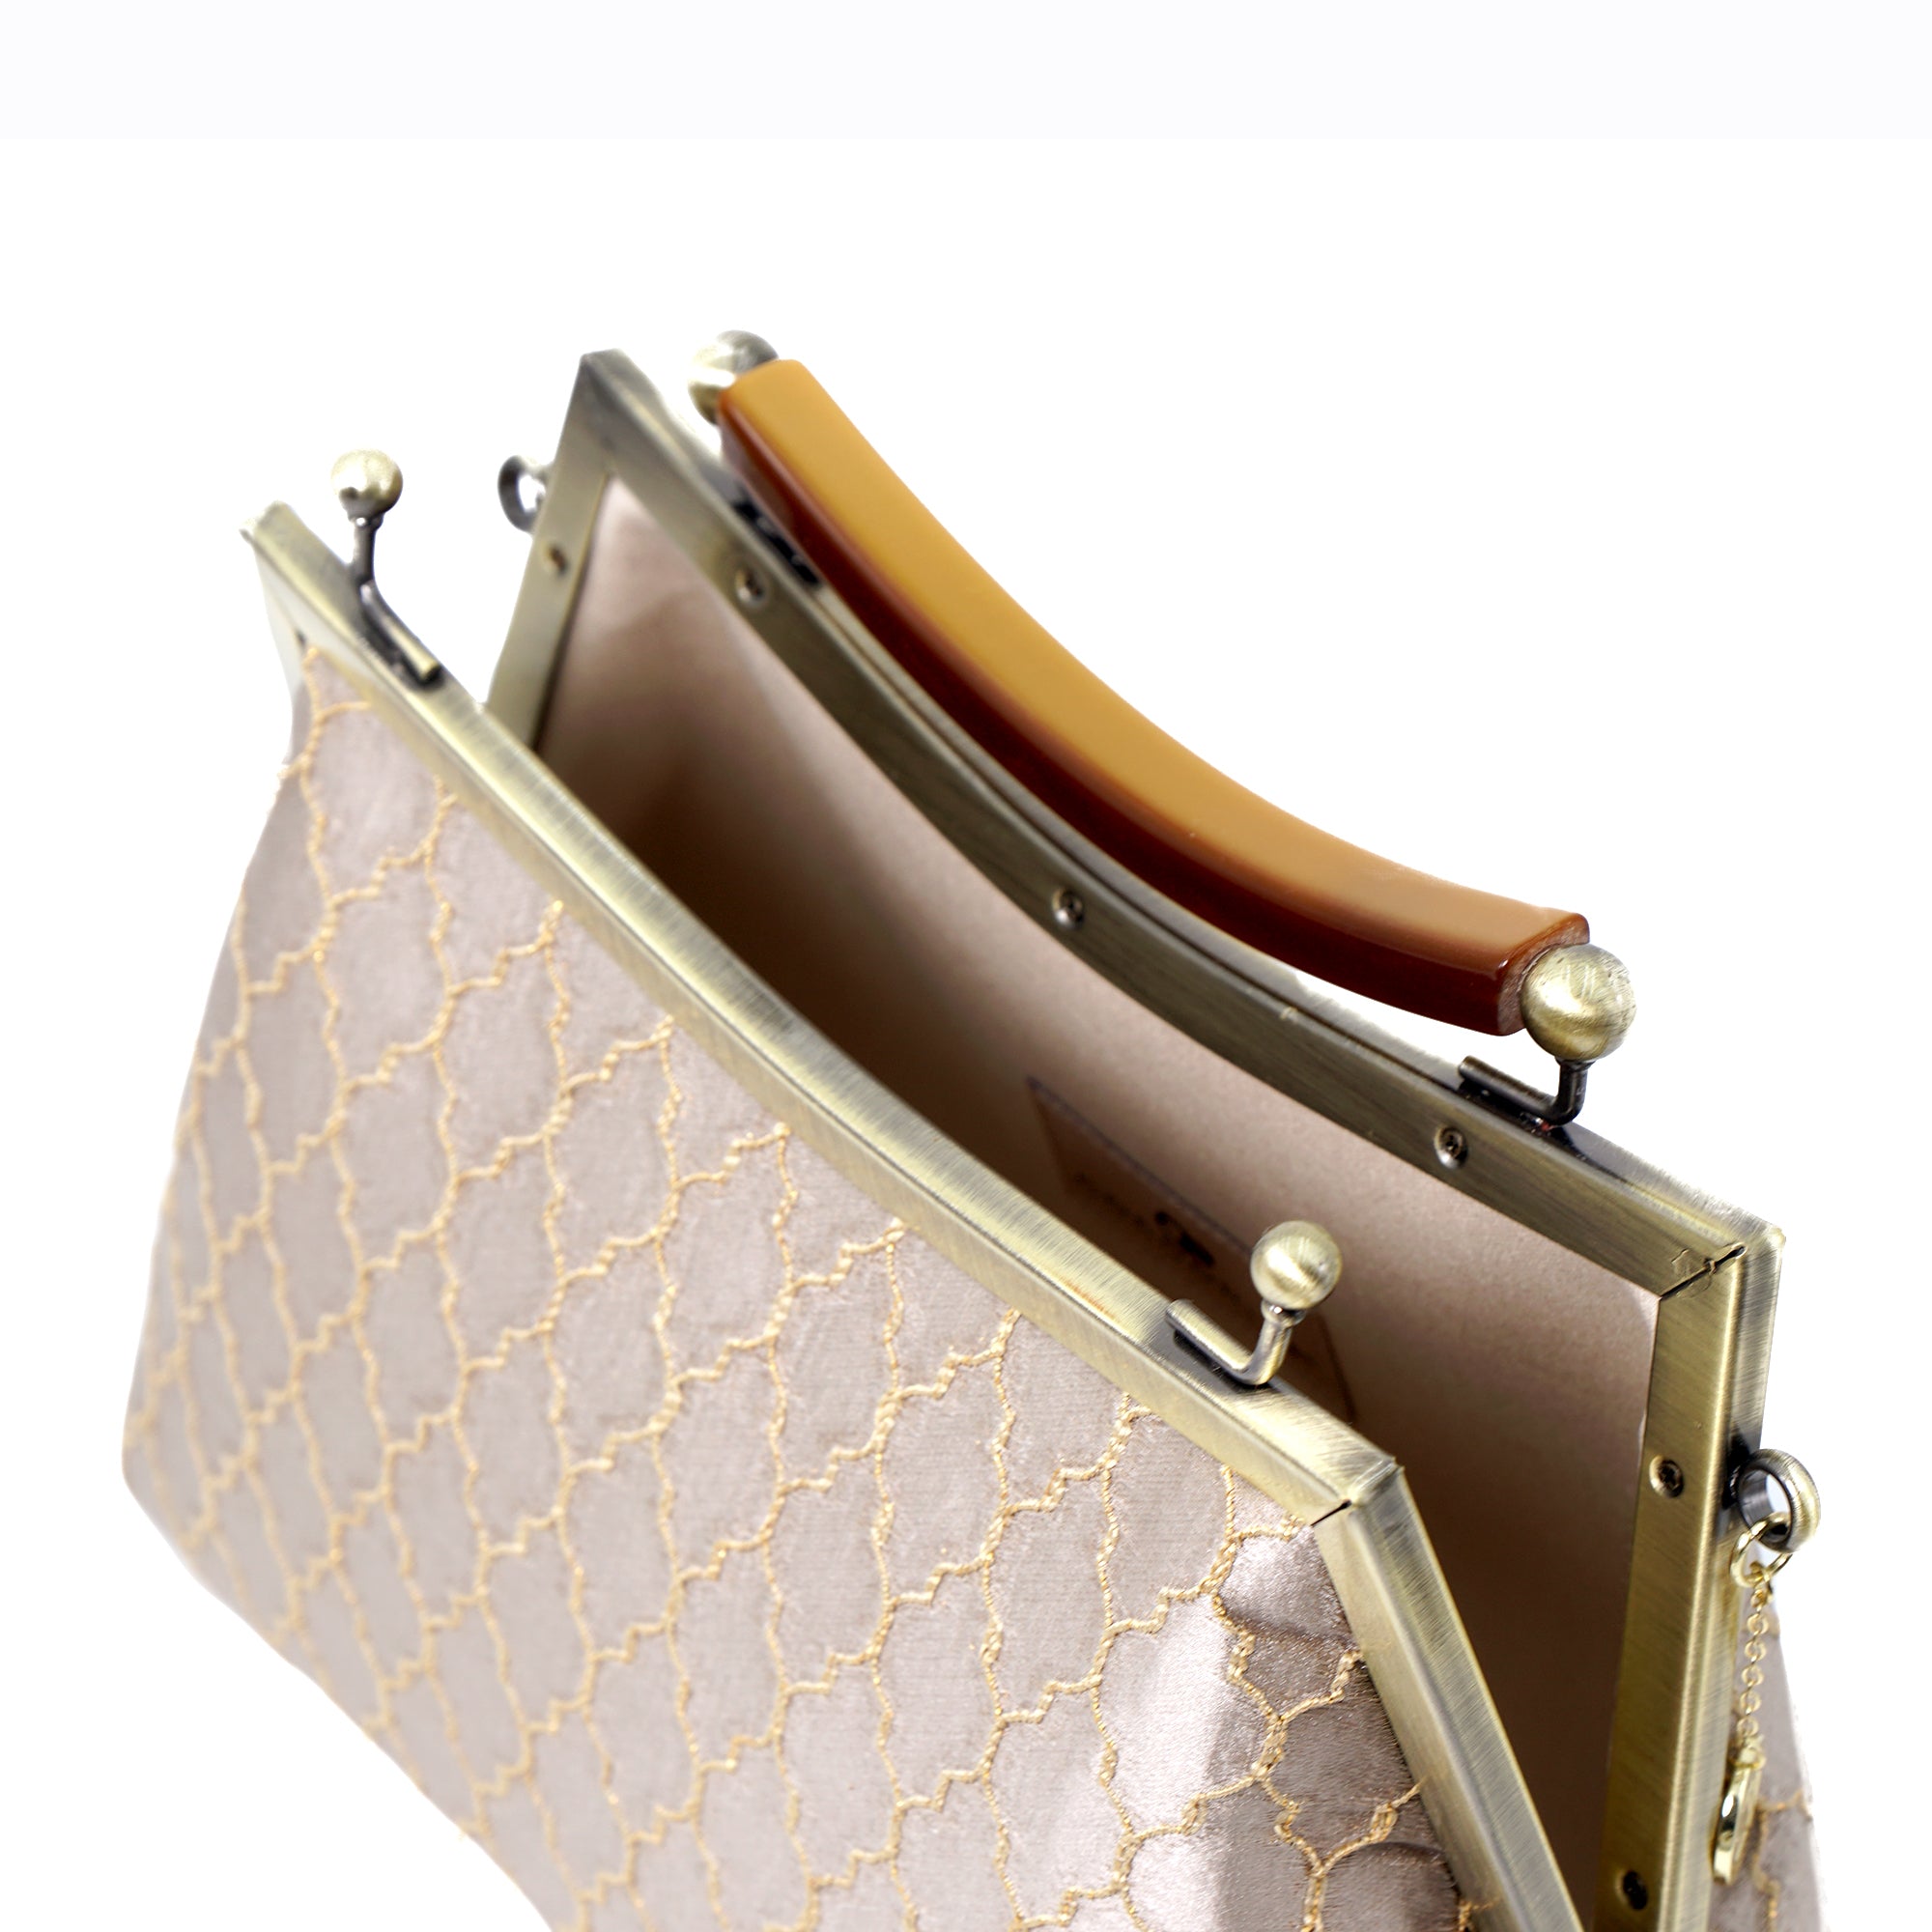 Amber Resin Top Handle Bag - Royal Crest (Khaki)